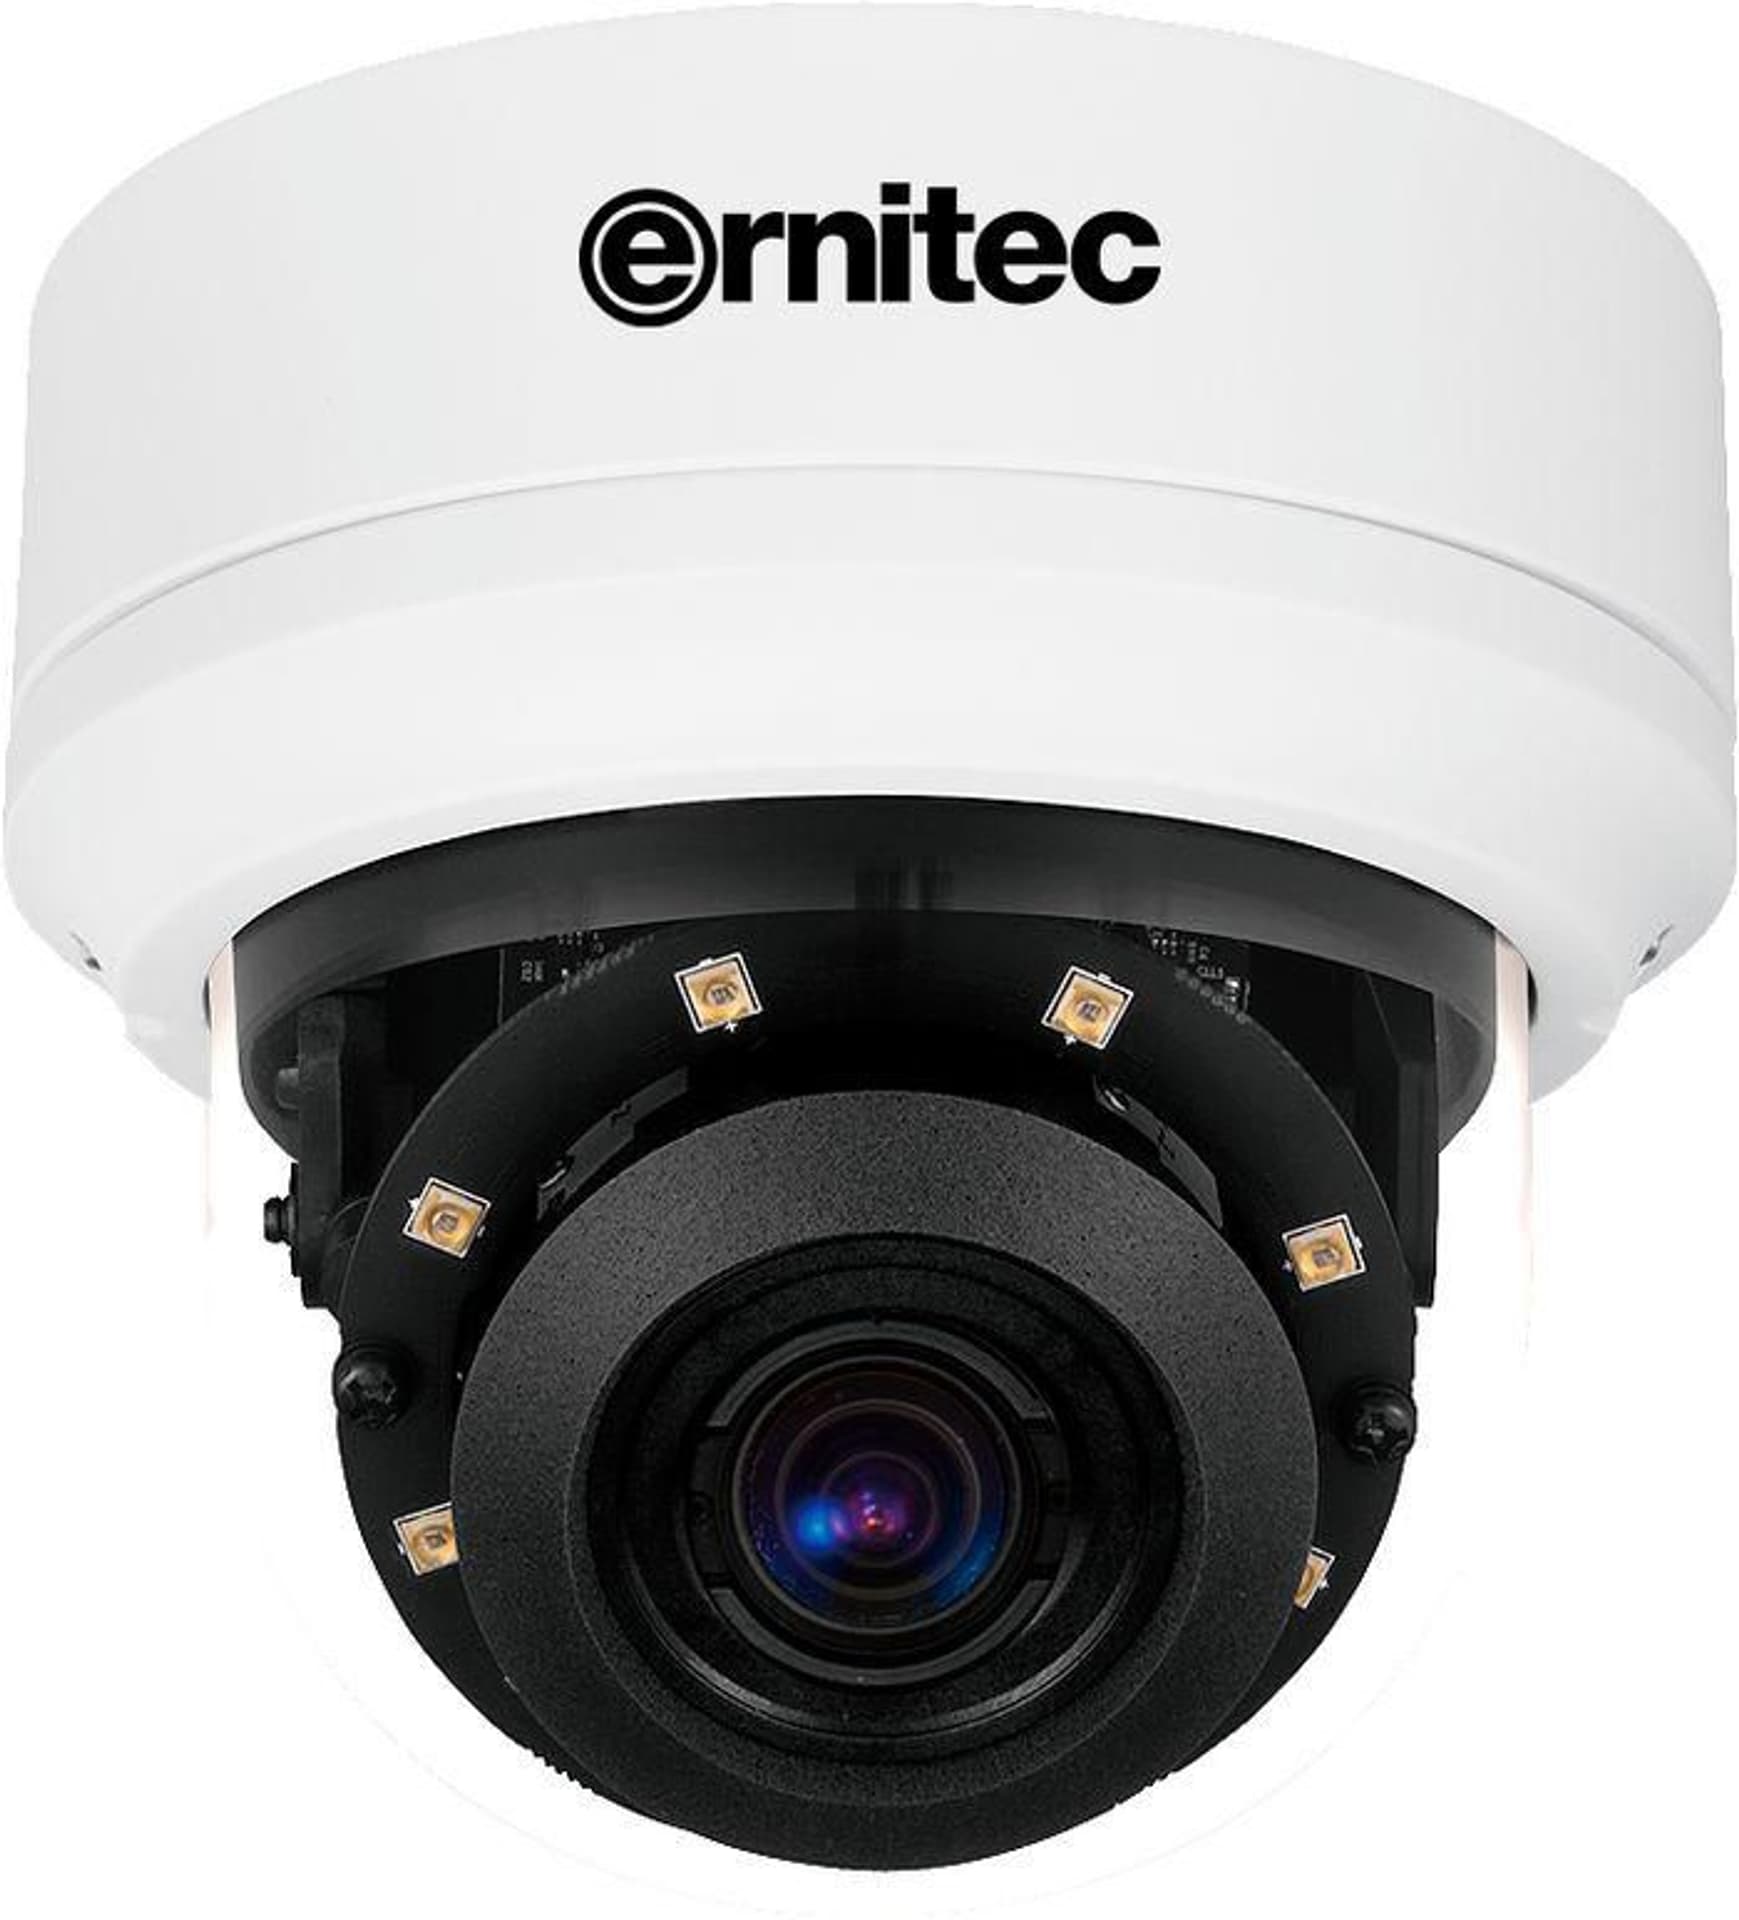 Zdjęcia - Kamera do monitoringu Ernitec MERCURY-DX-362IR 2.7-12mm